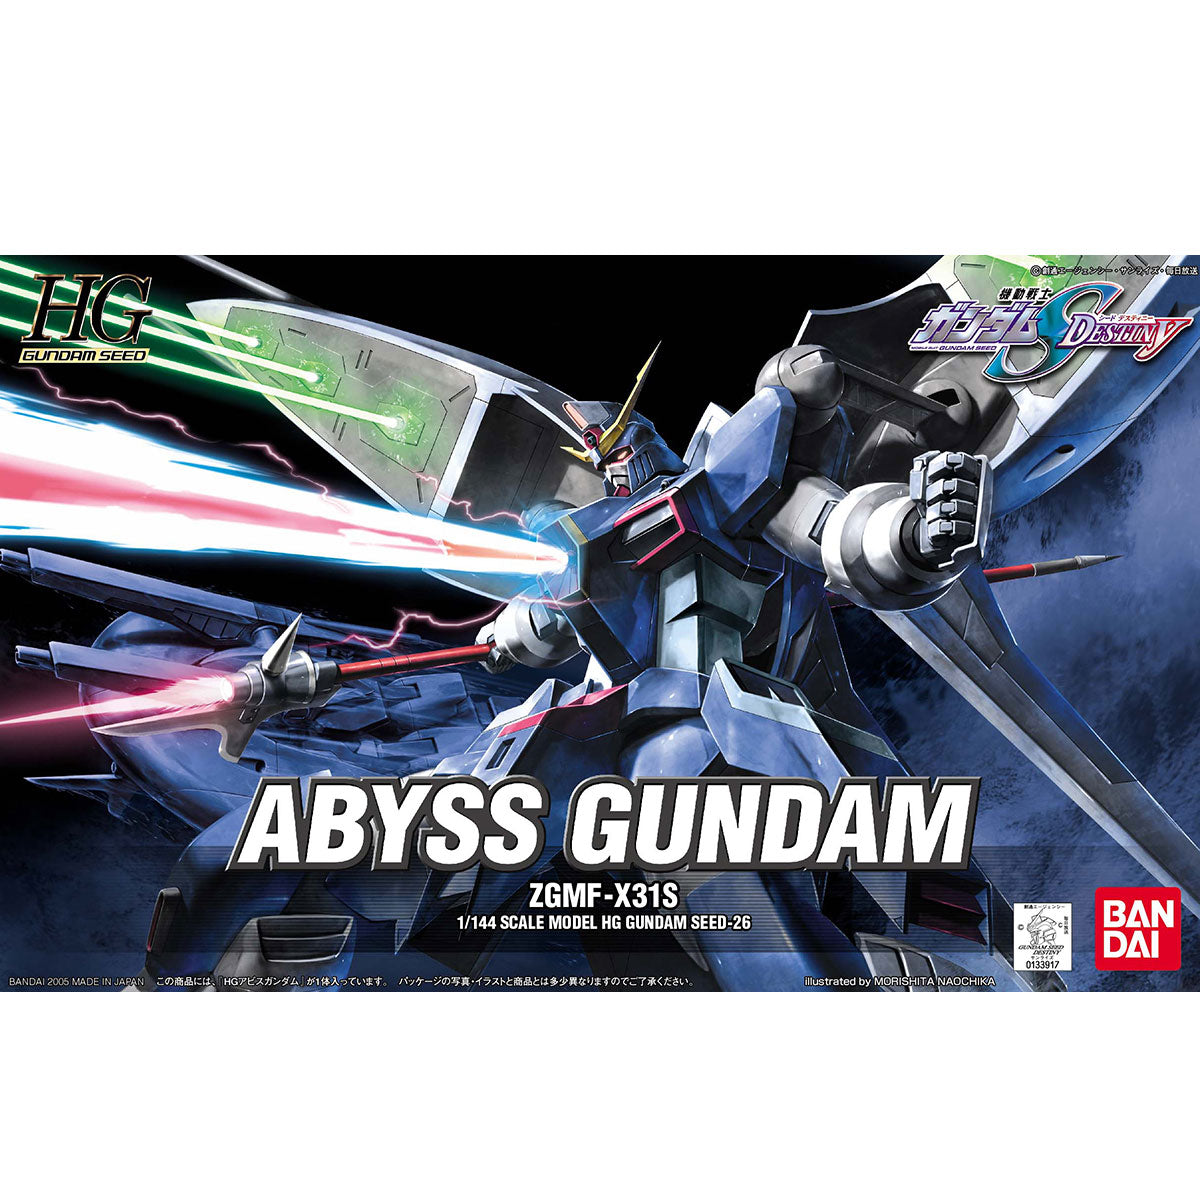 HG Abyss Gundam ZGMF-X31S 1/144